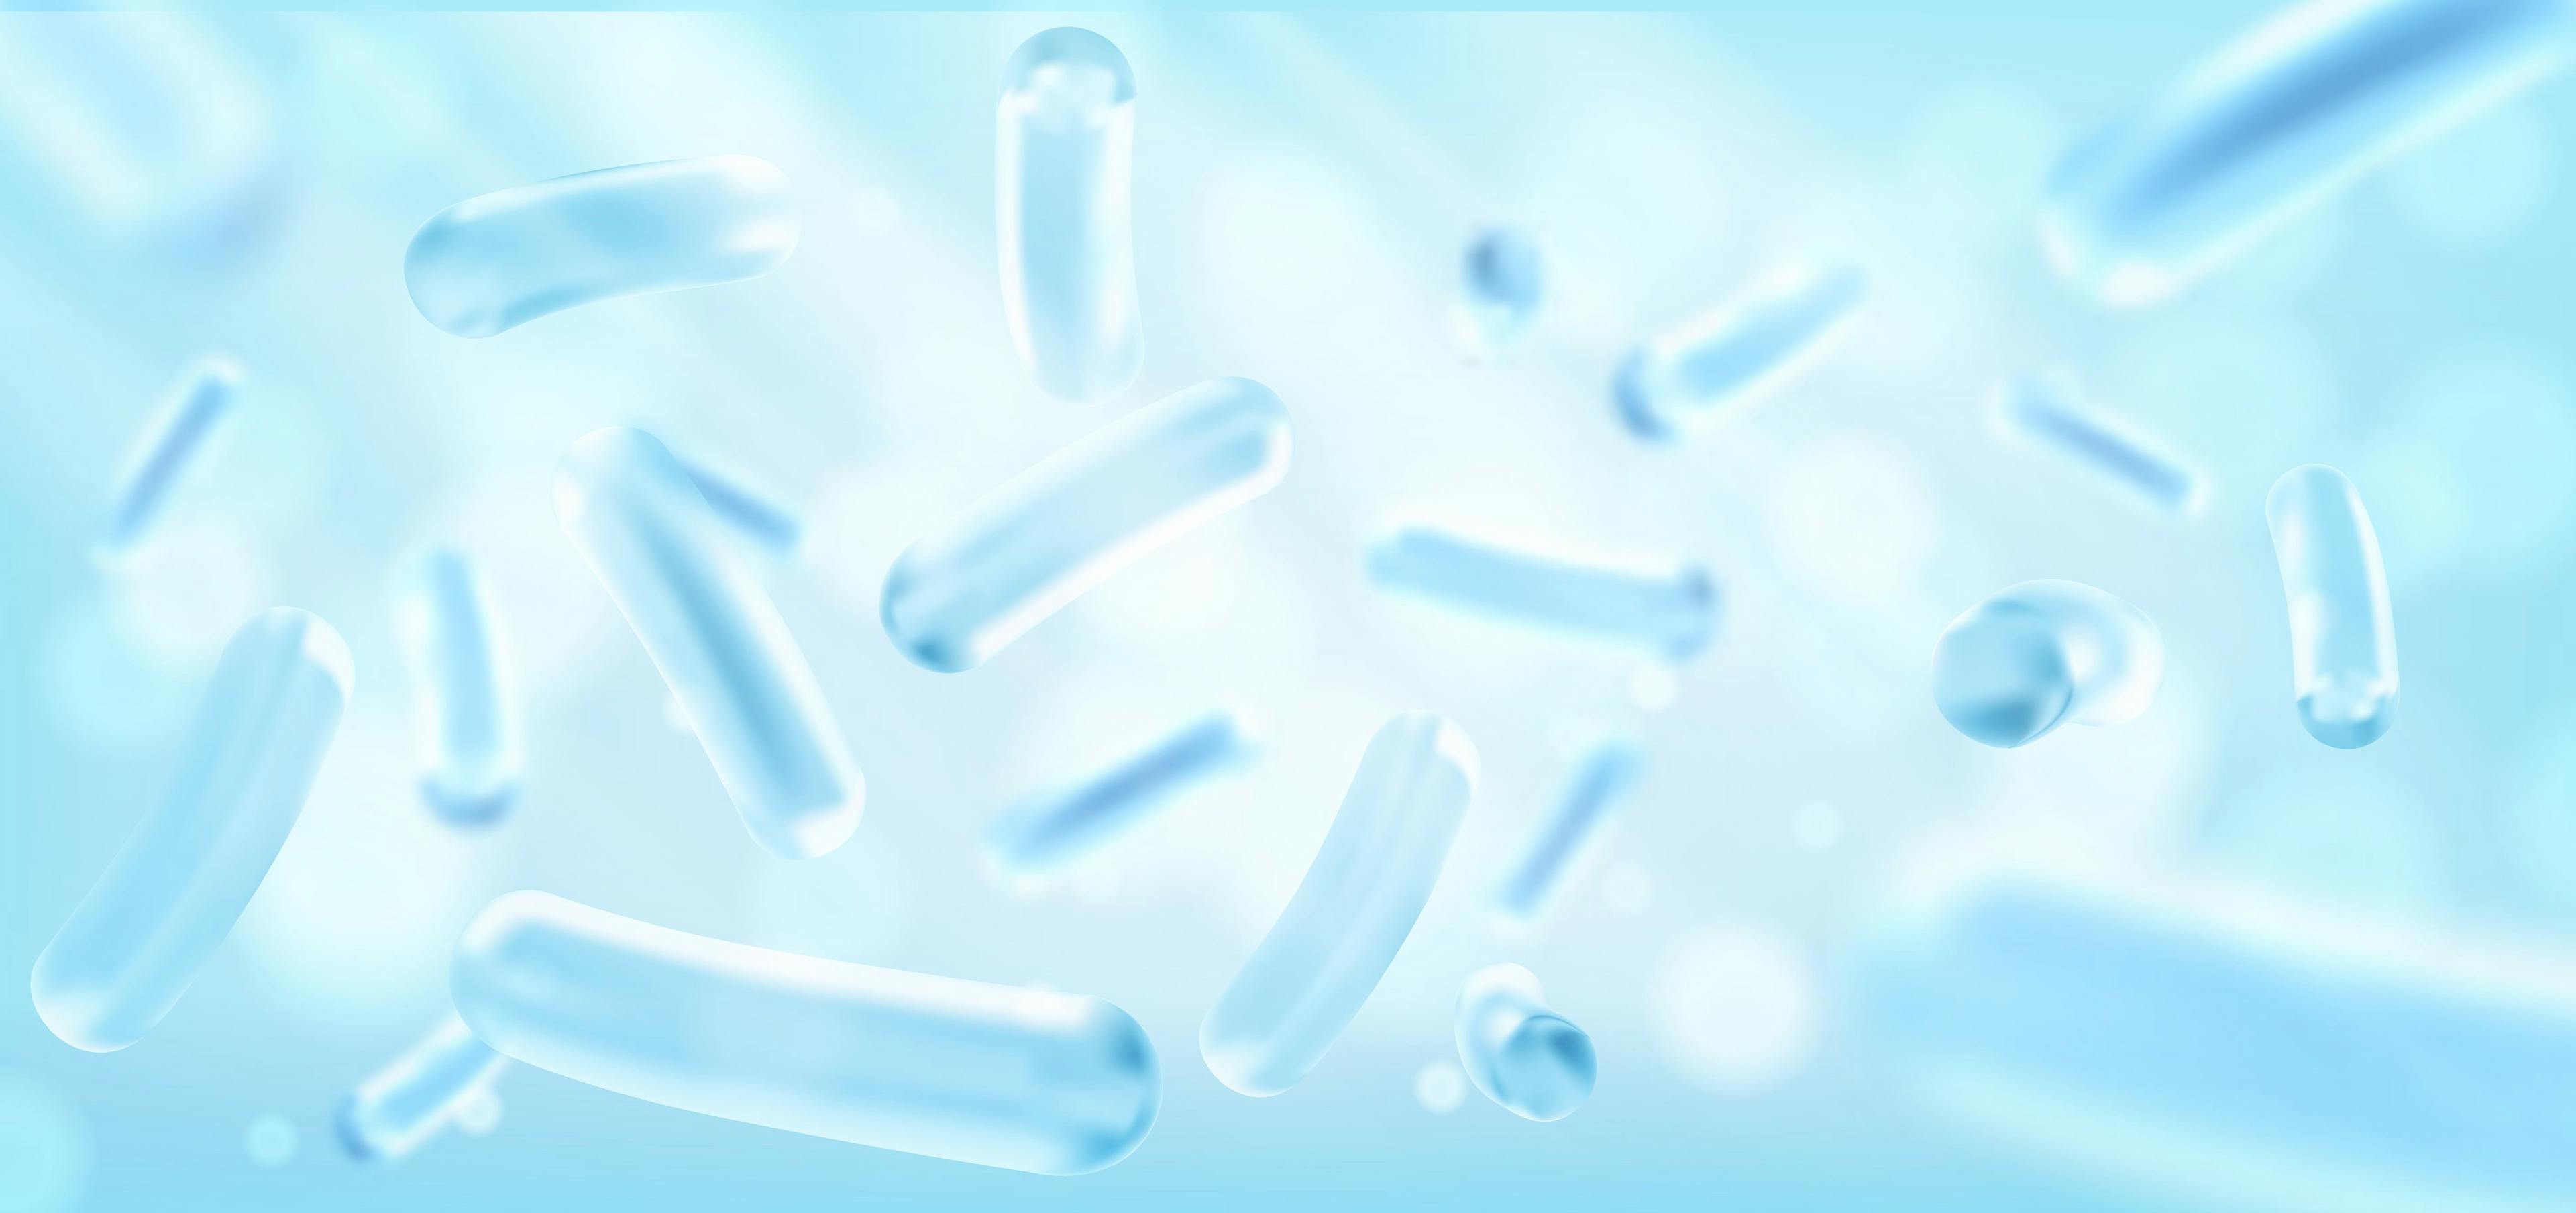 Prebiotic Supplementation Concept | image credit: sveta - stock.adobe.com